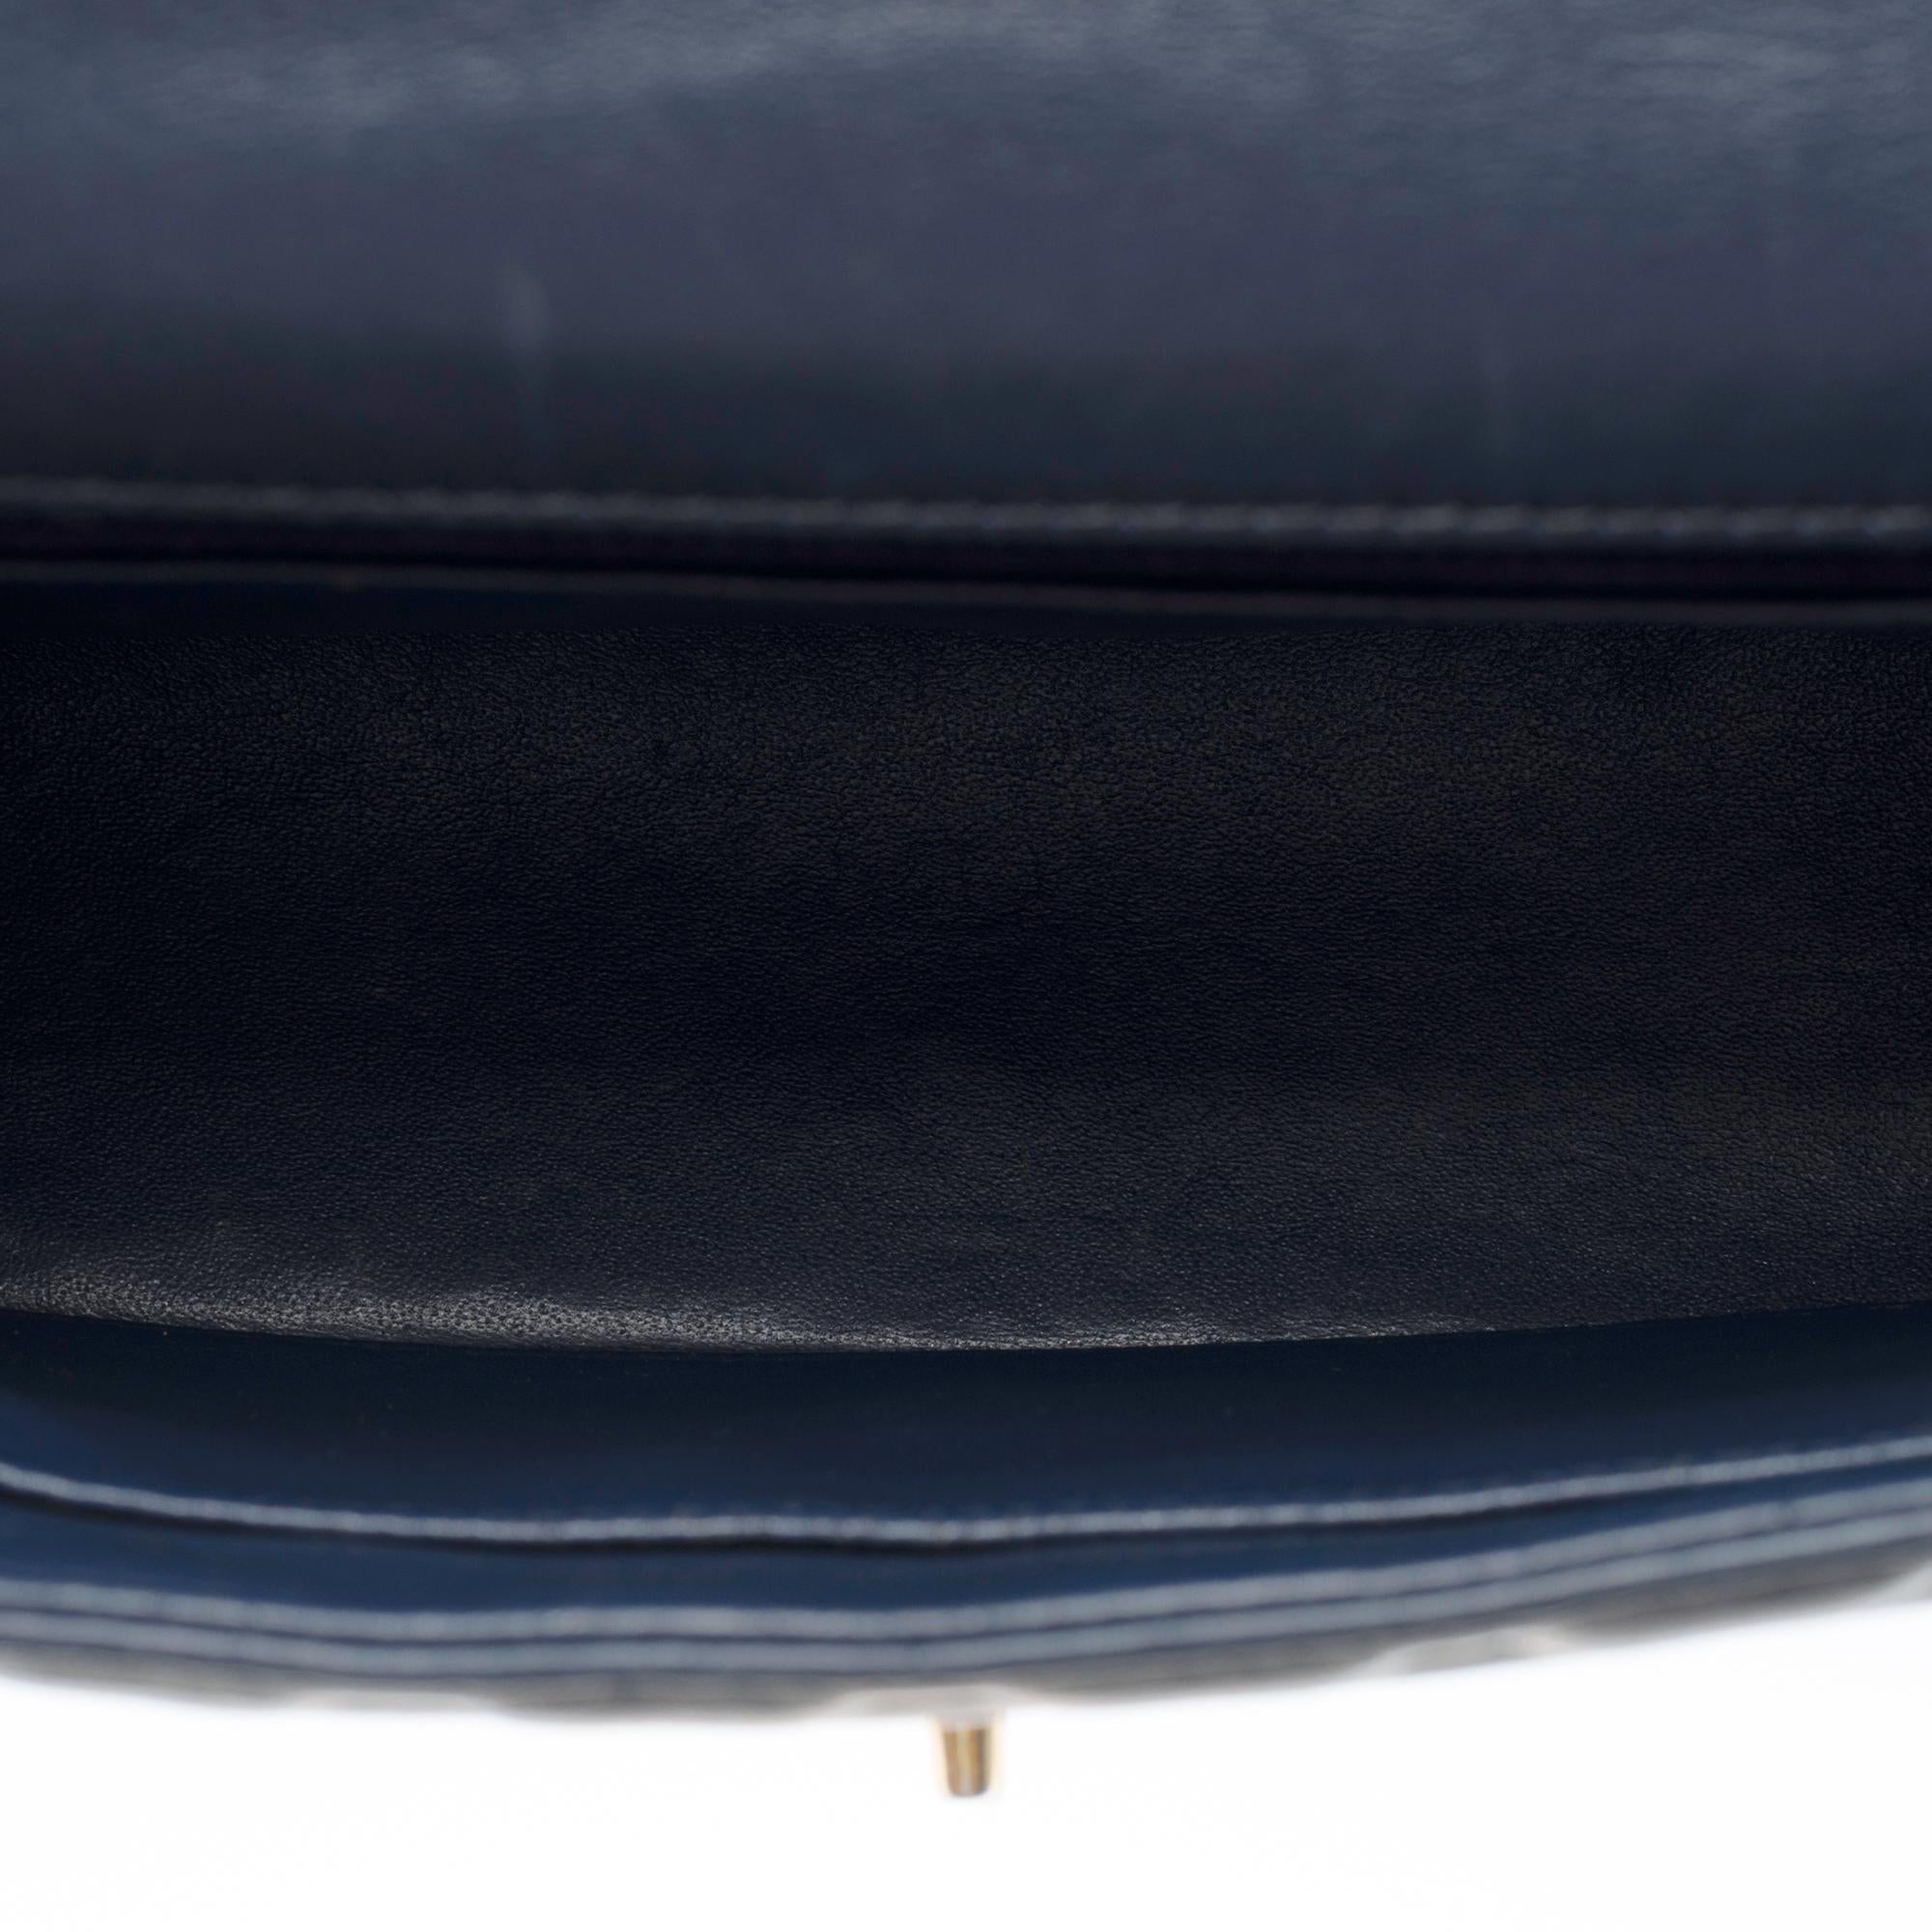 FW2016 Paris-Rome- Chanel Coco handle handbag in Navy blue lambskin leather, GHW 3